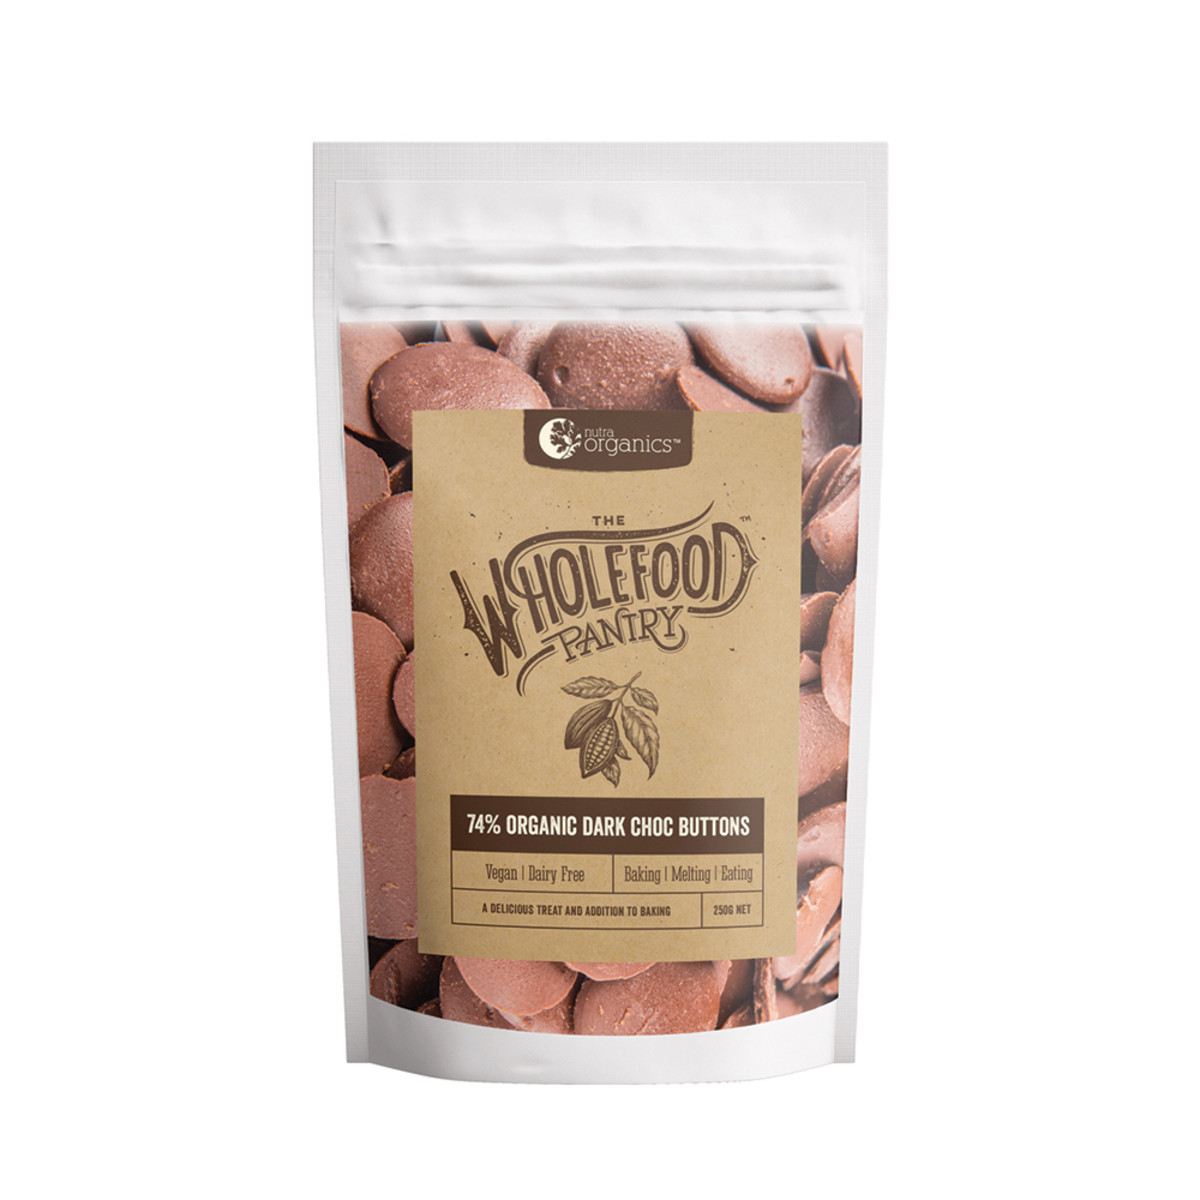 NUTRA ORGANICS - THE WHOLEFOOD PANTRY 74% Organic Dark Chocolate Buttons